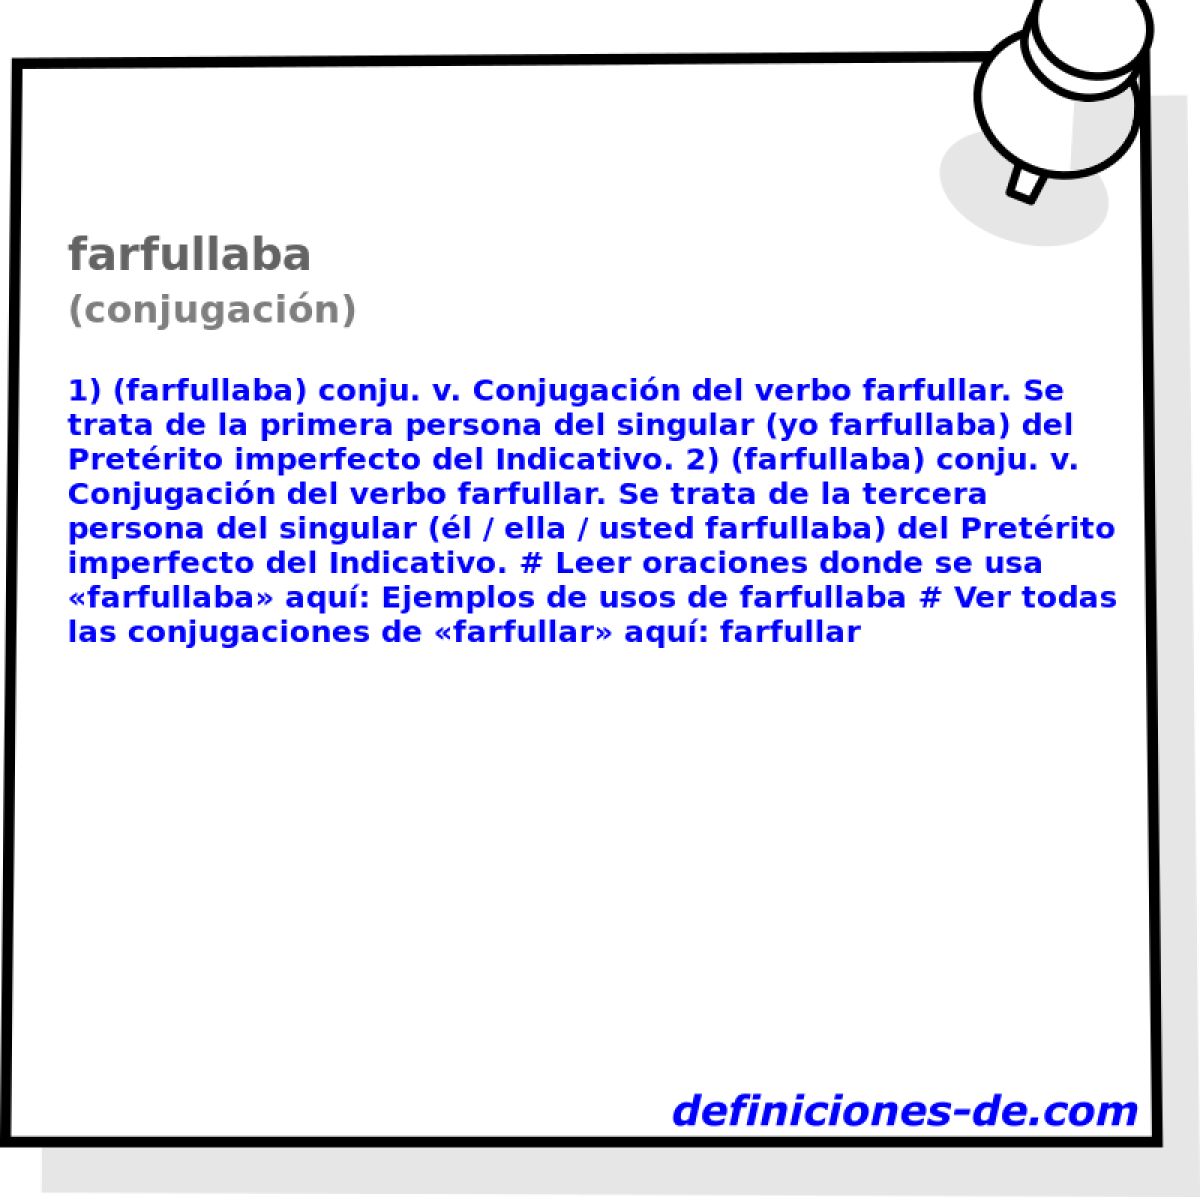 farfullaba (conjugacin)